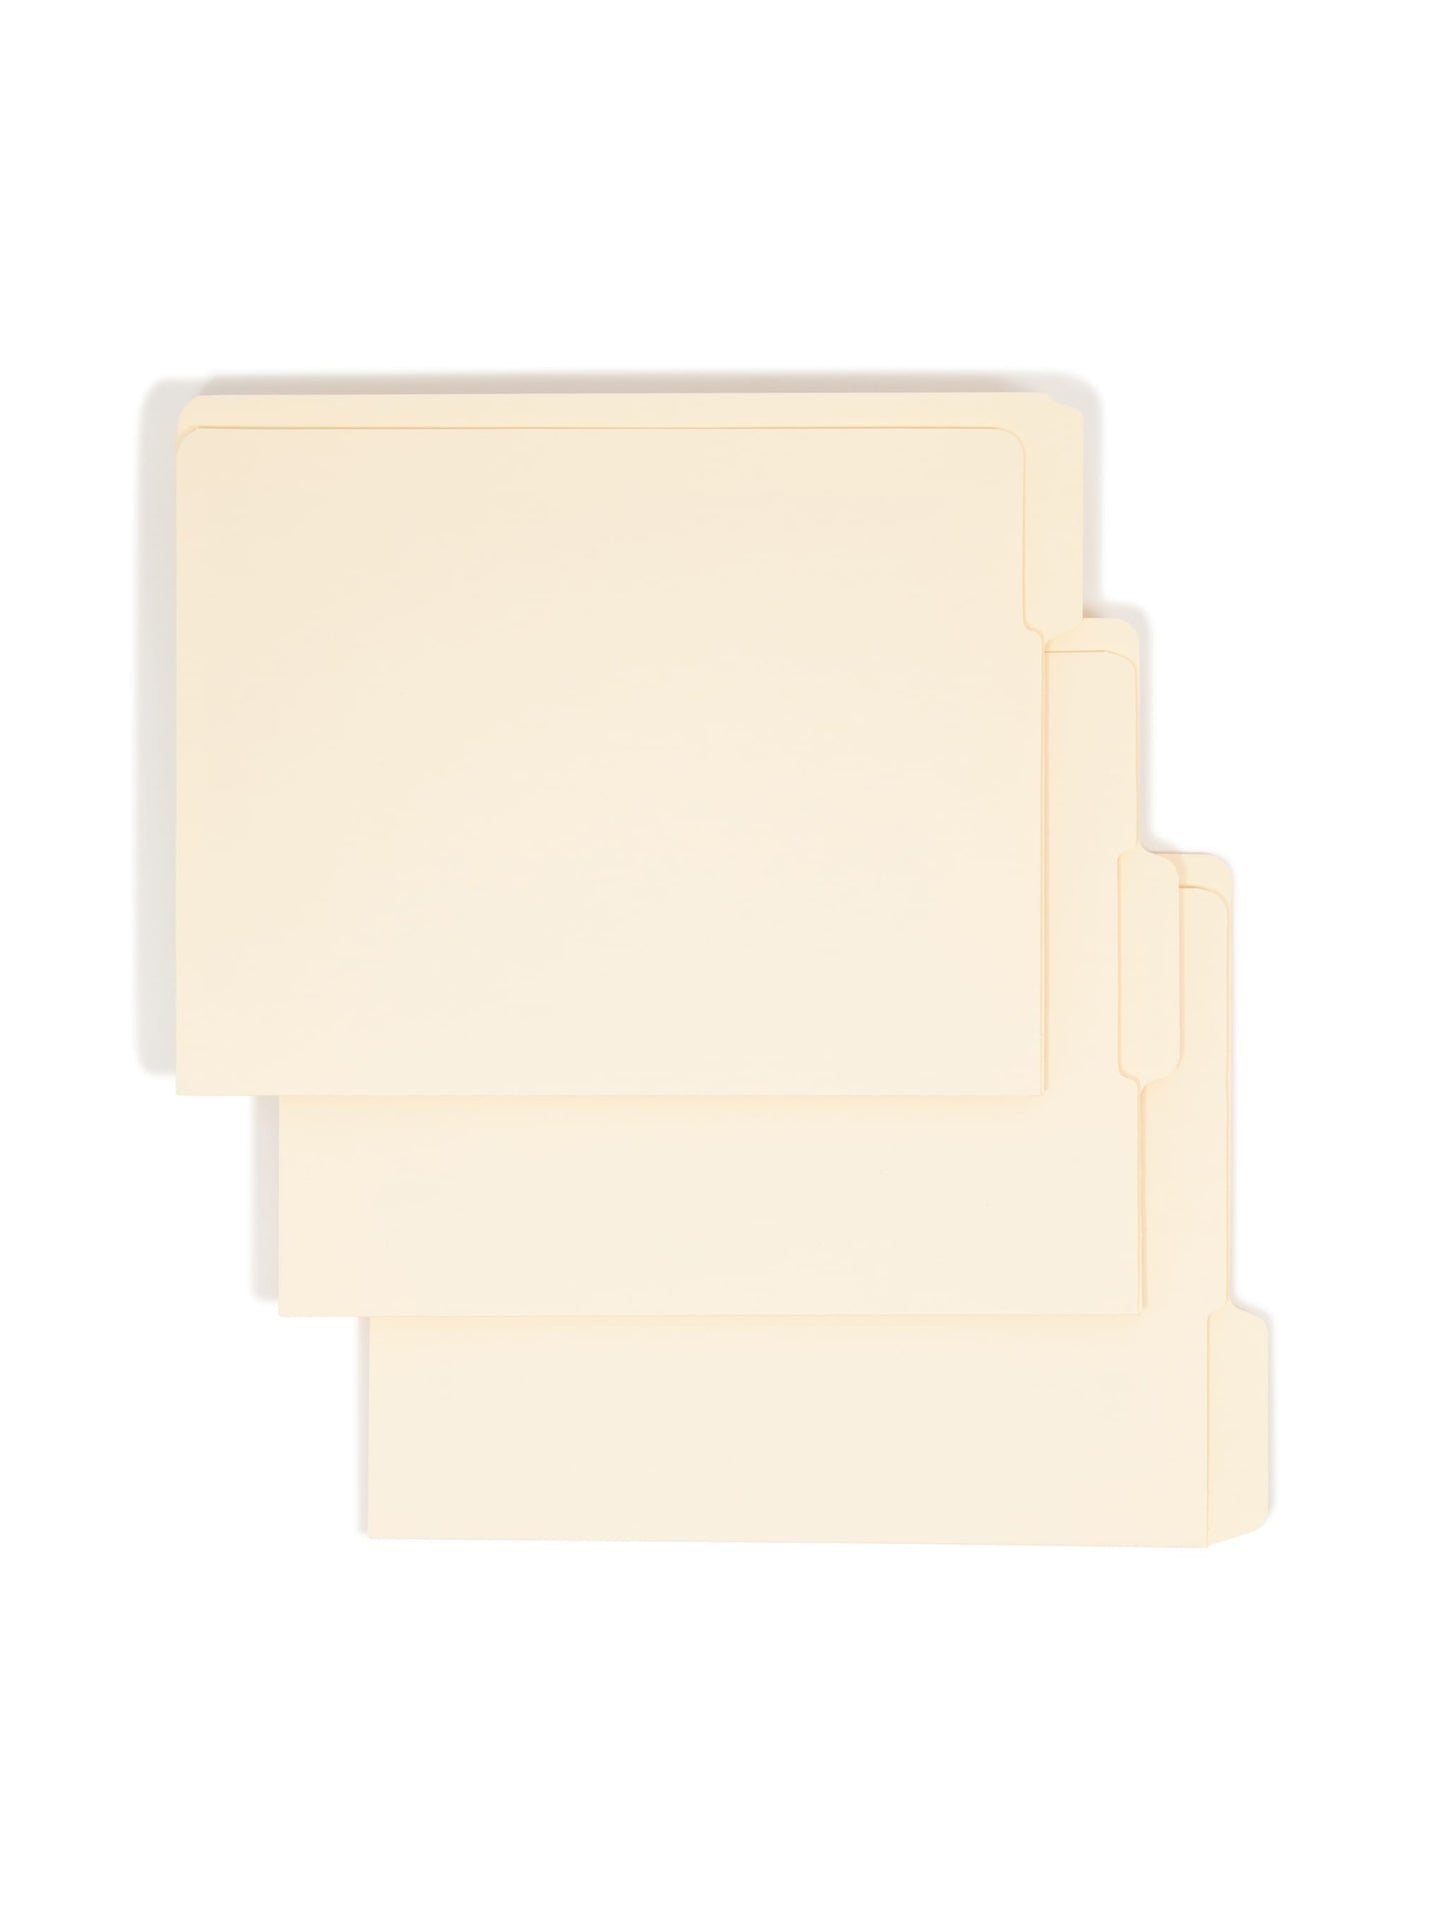 Standard End Tab File Folders, 1/3-Cut Tab, Manila Color, Letter Size, Set of 100, 086486241304